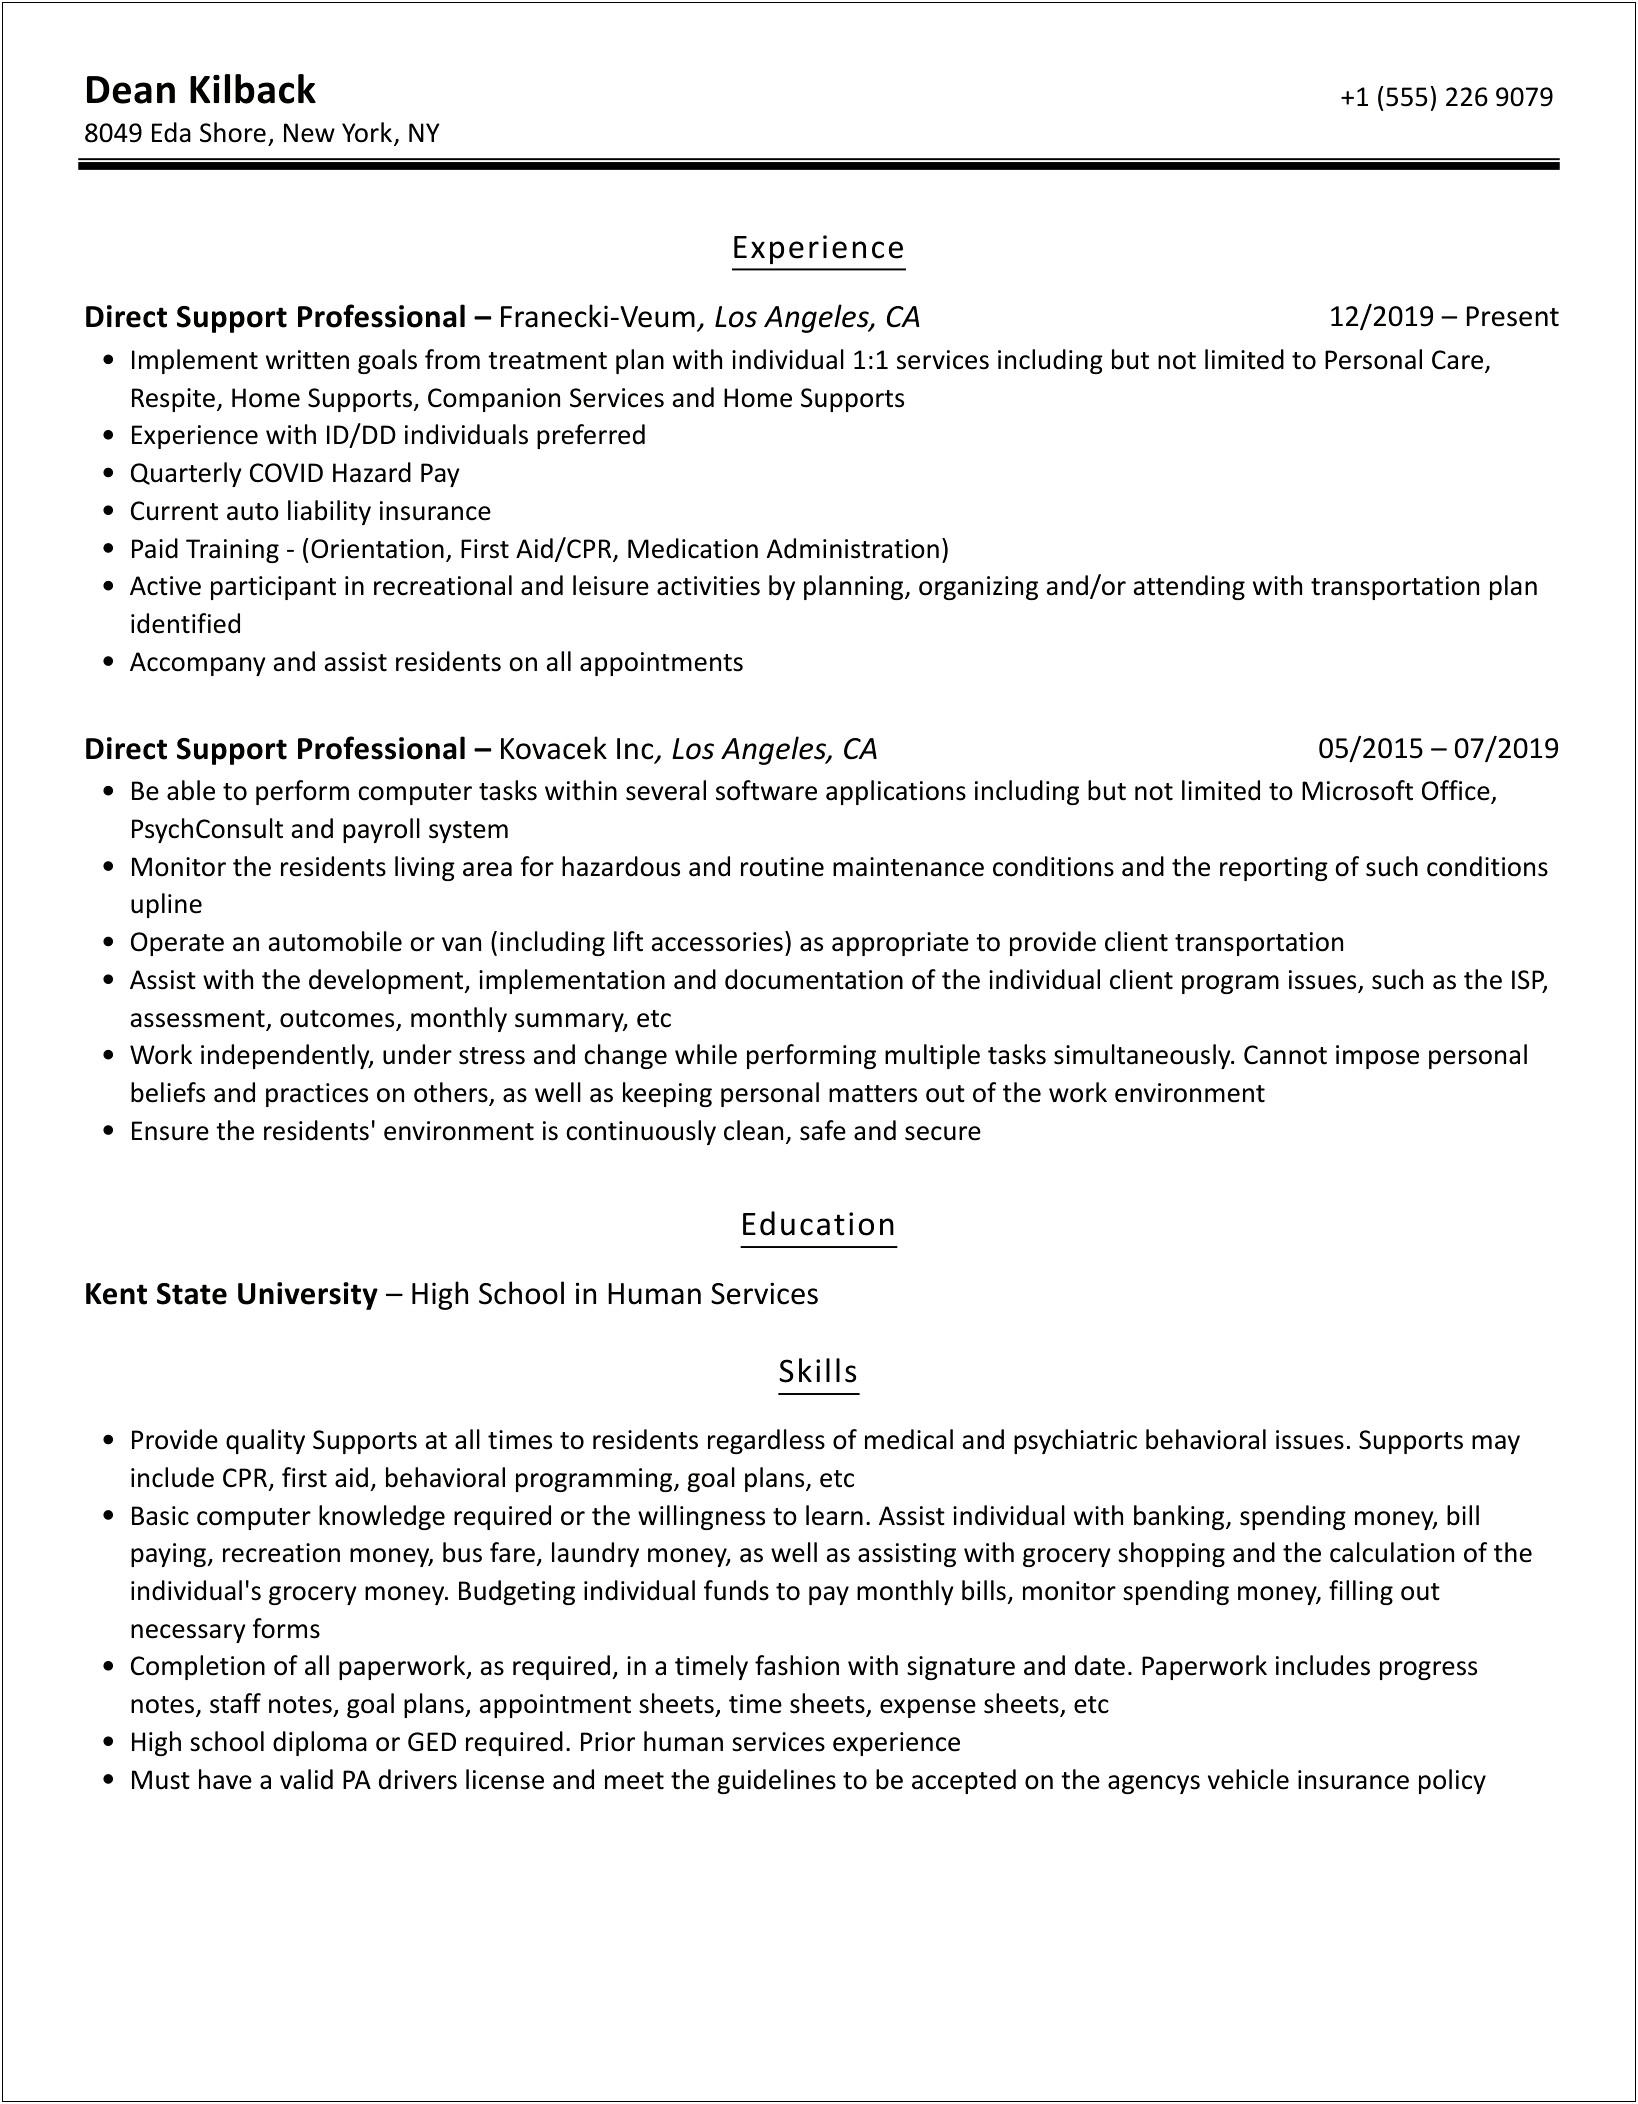 Direct Support Professional Job Description For Resume